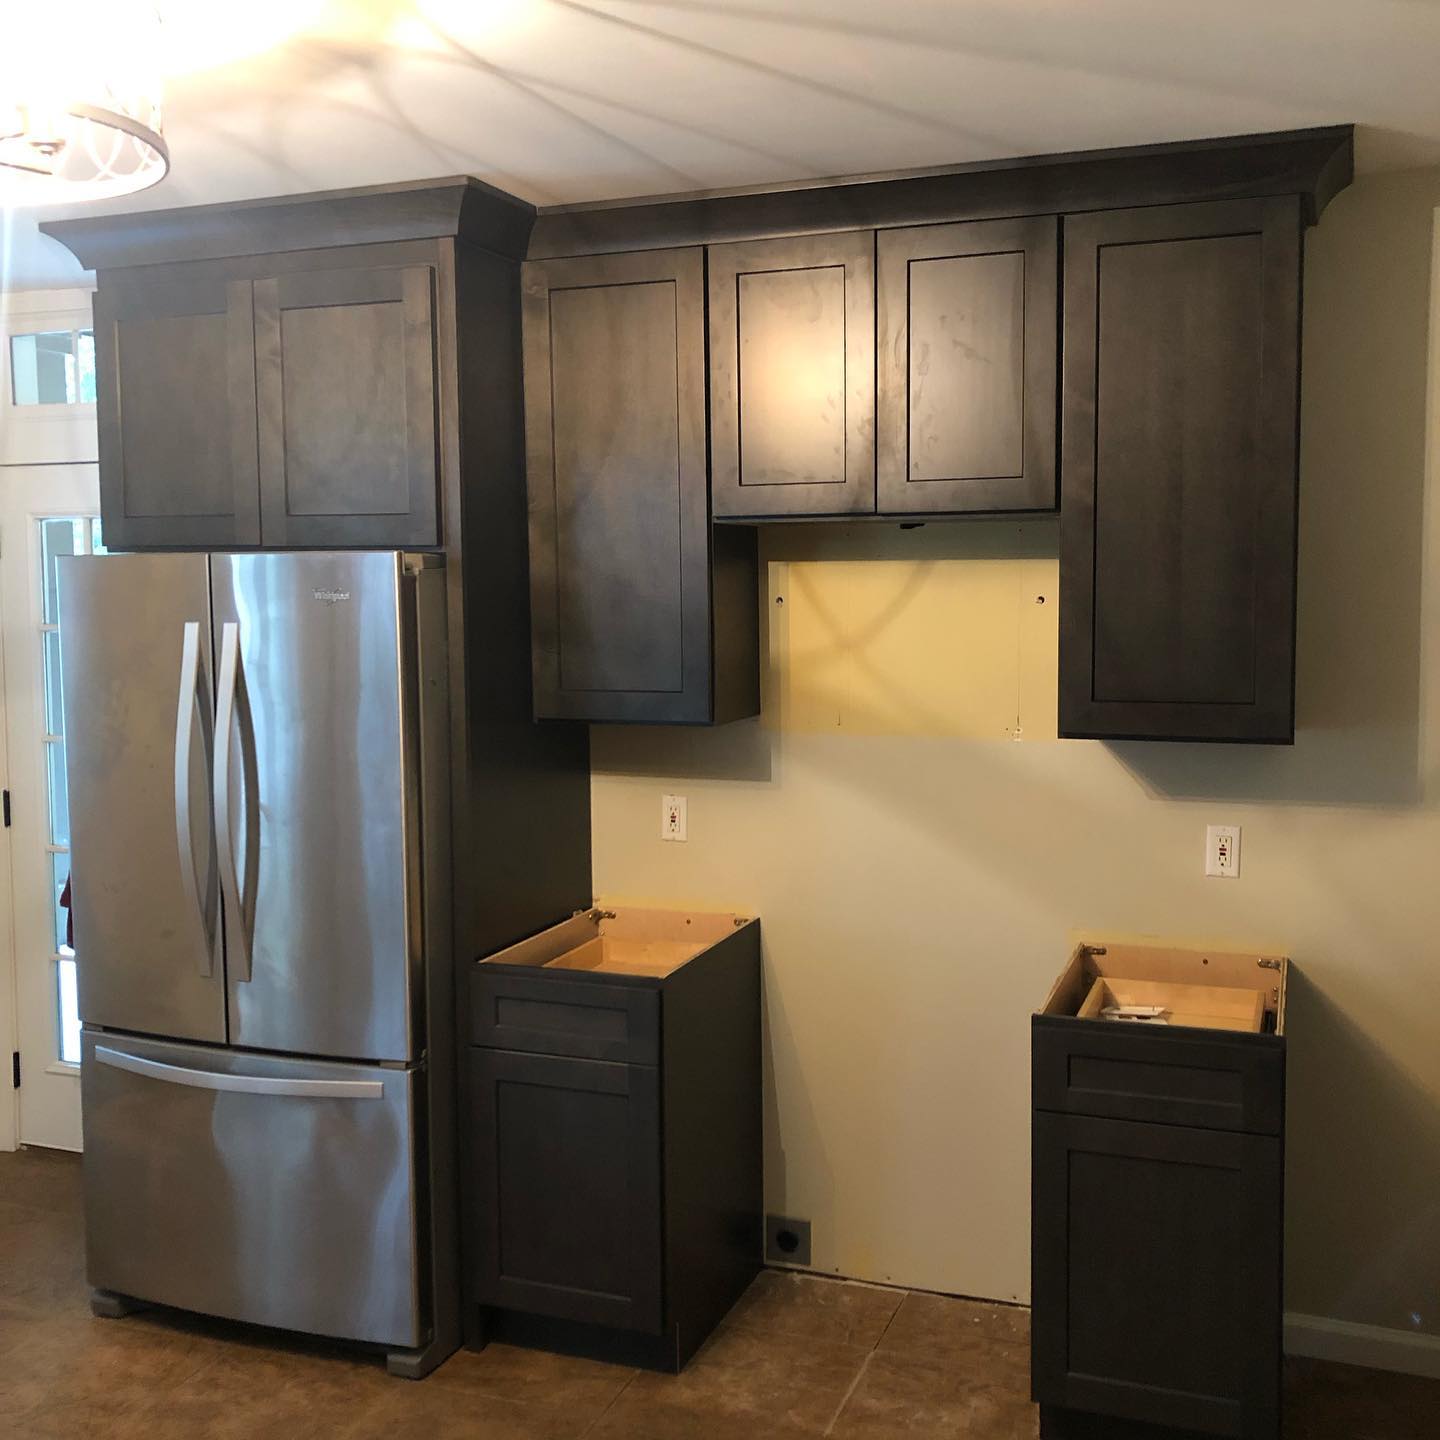 Basement Kitchen Cabinets Installed 8